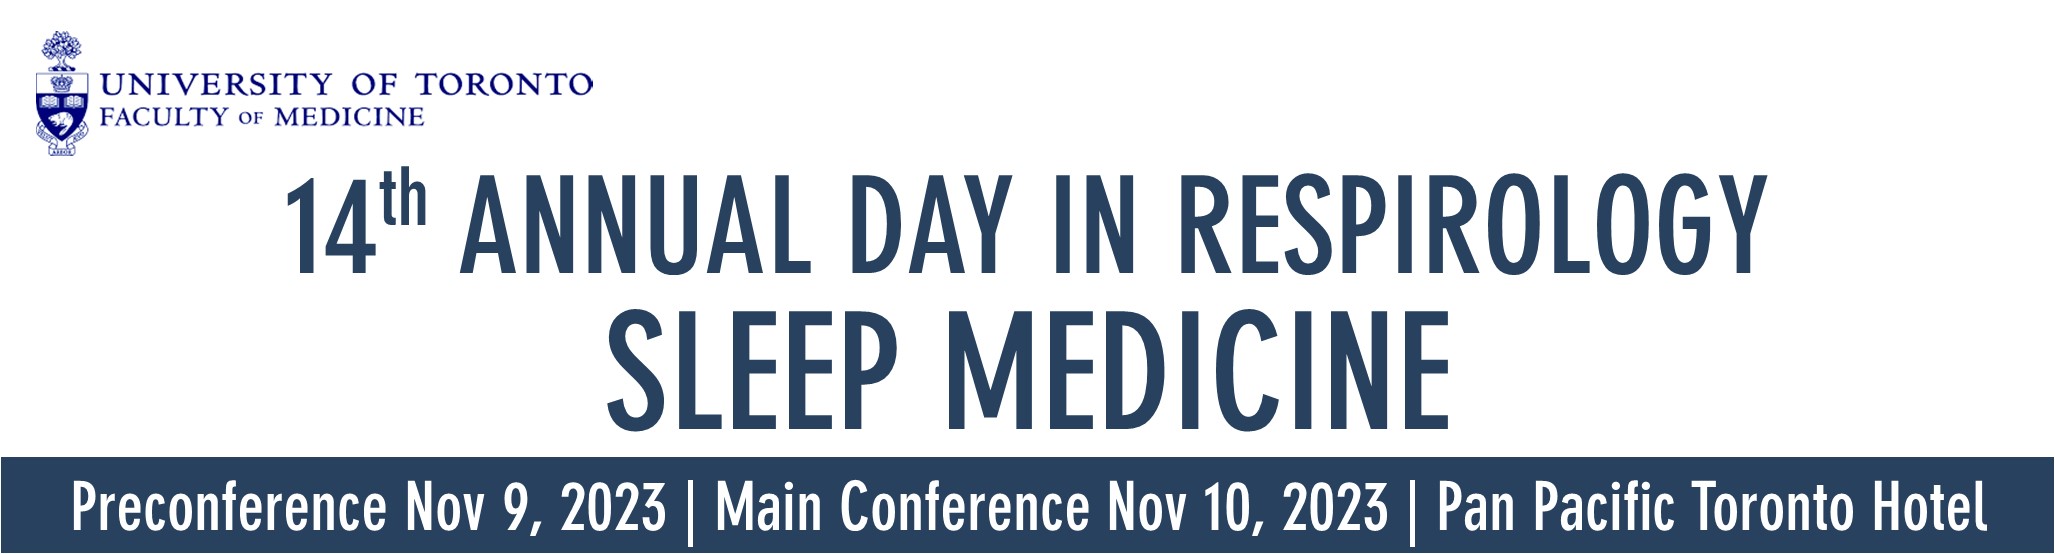 Annual Day in Respirology: Sleep Medicine